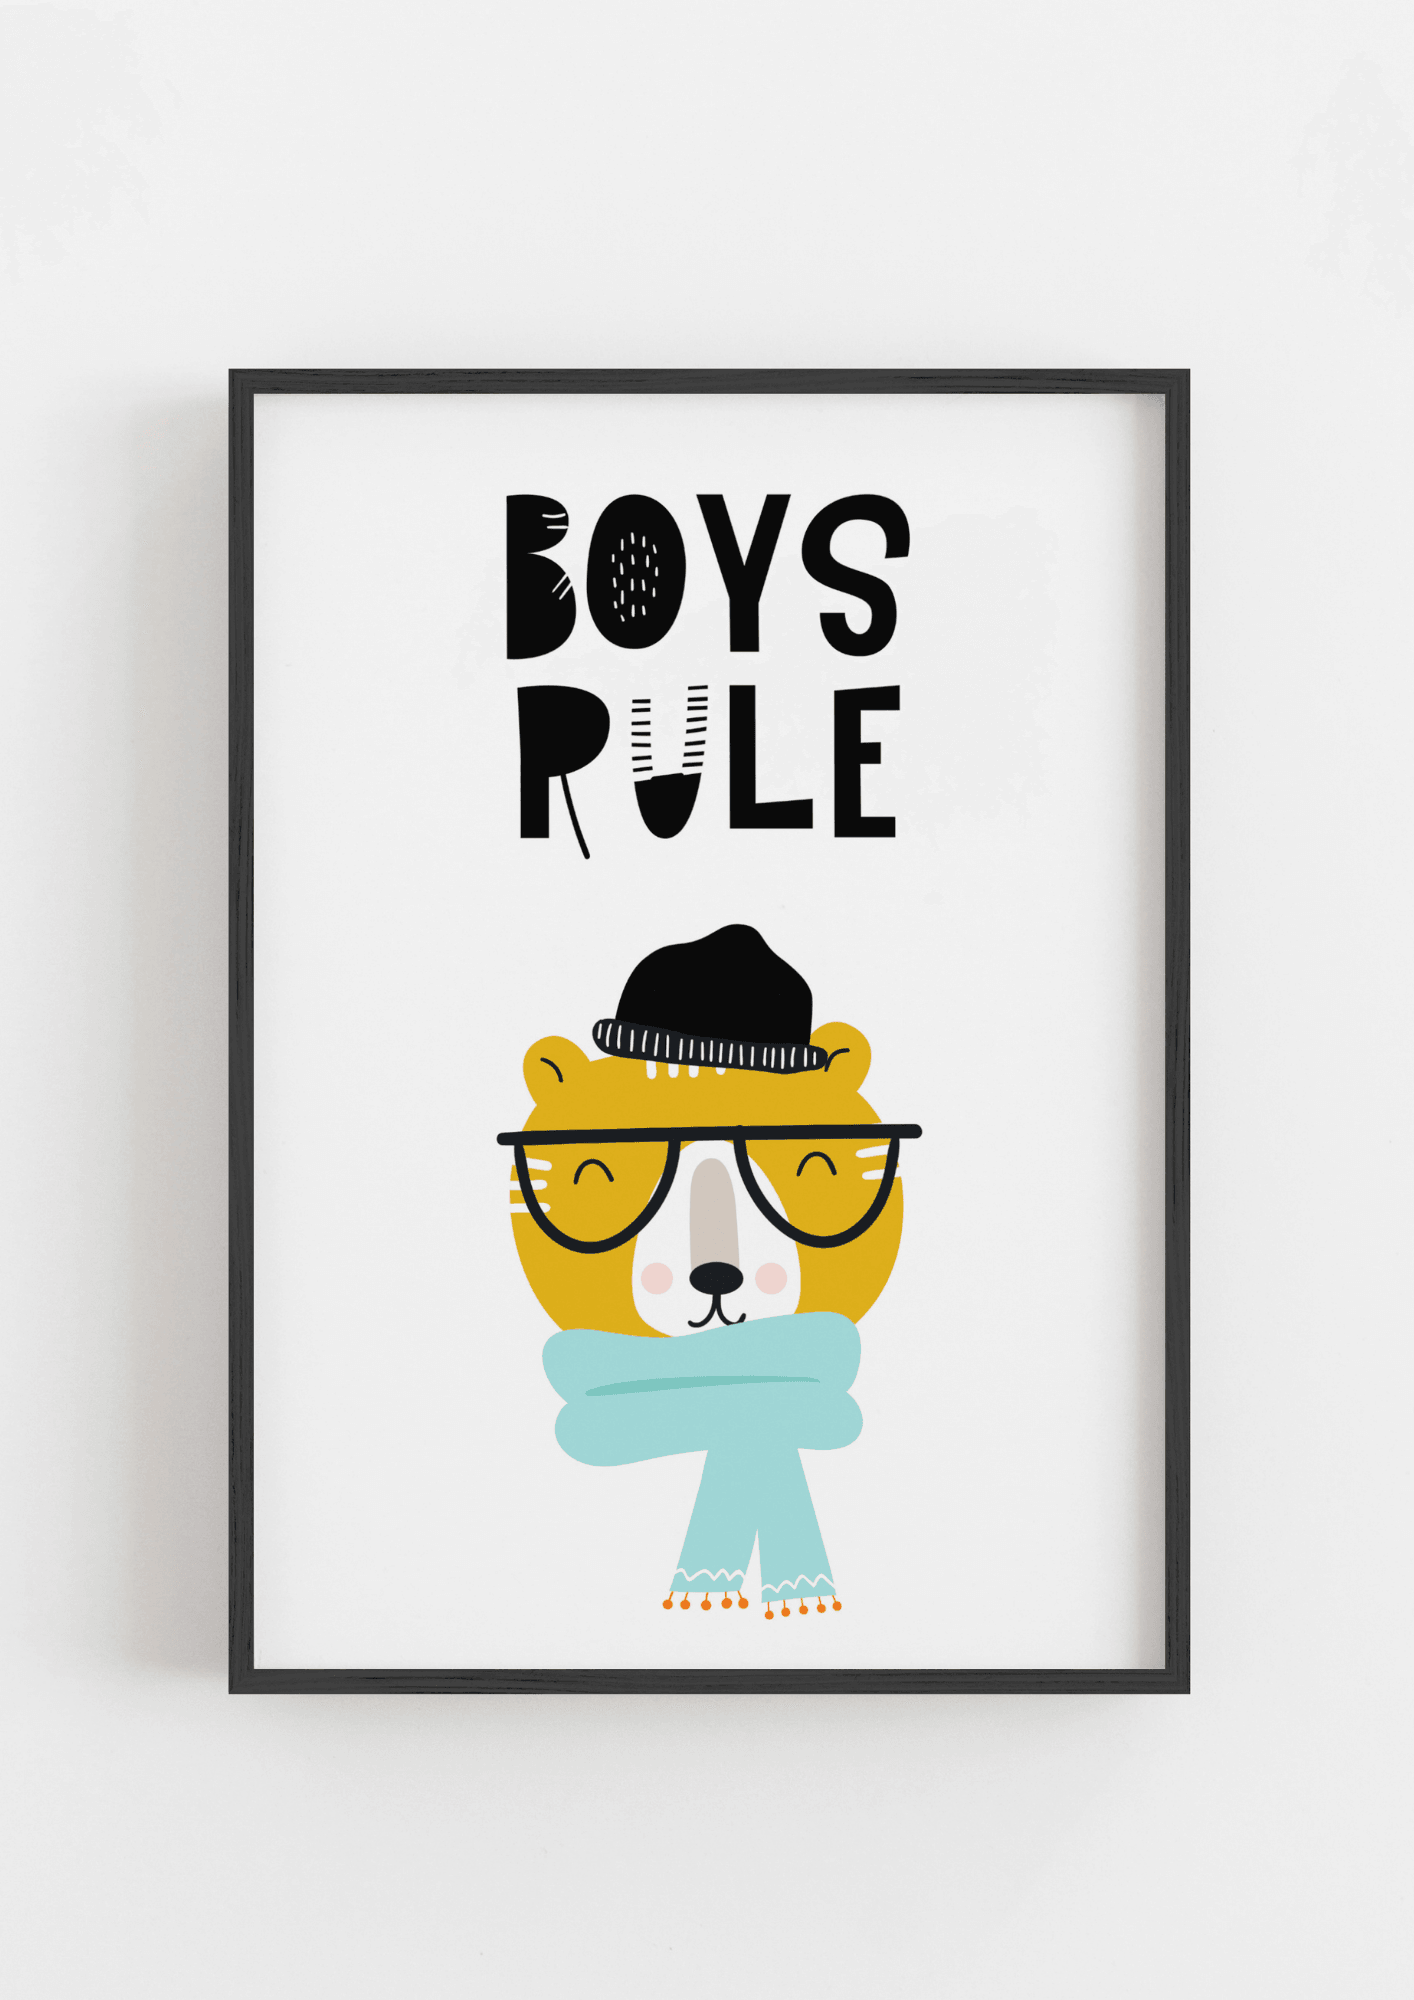 Boys Rule - The Ditzy Dodo